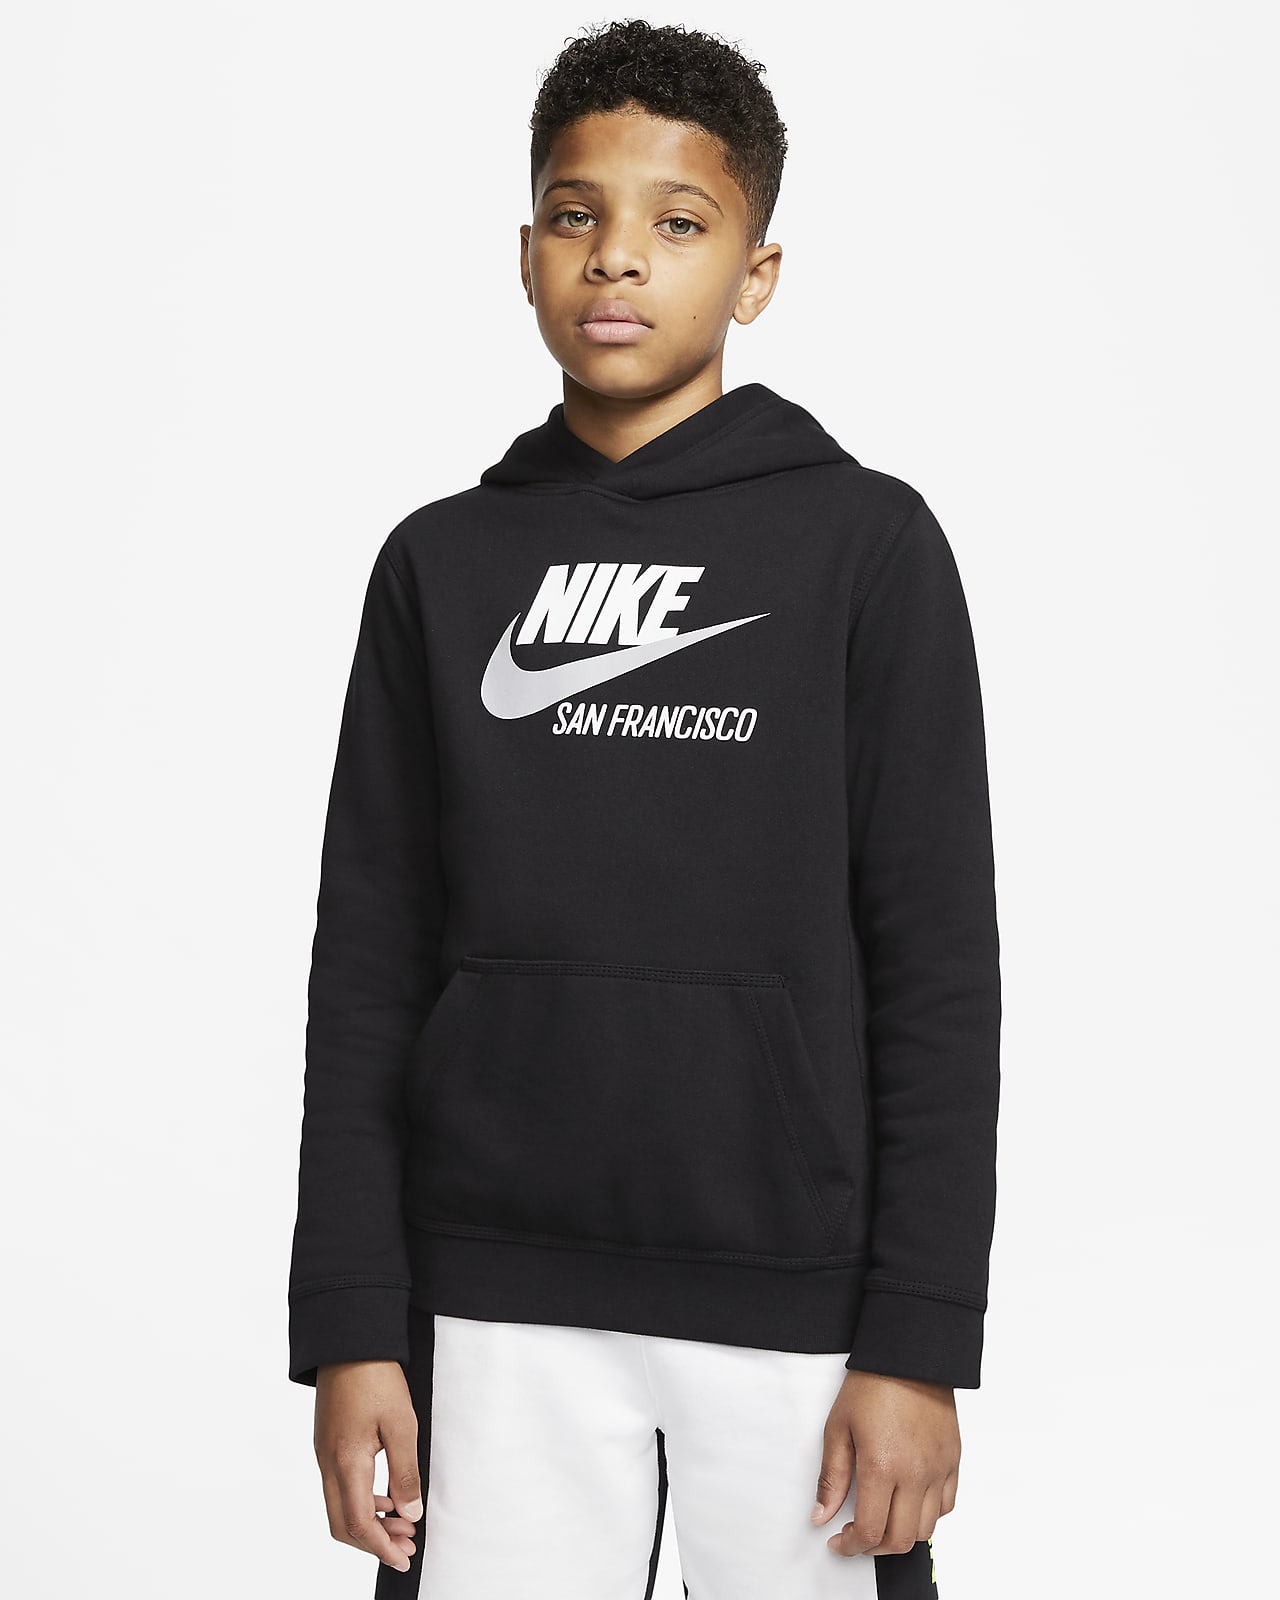 Big Hoodie. Francisco San Sportswear Fleece Nike Kids\' Club Pullover Nike